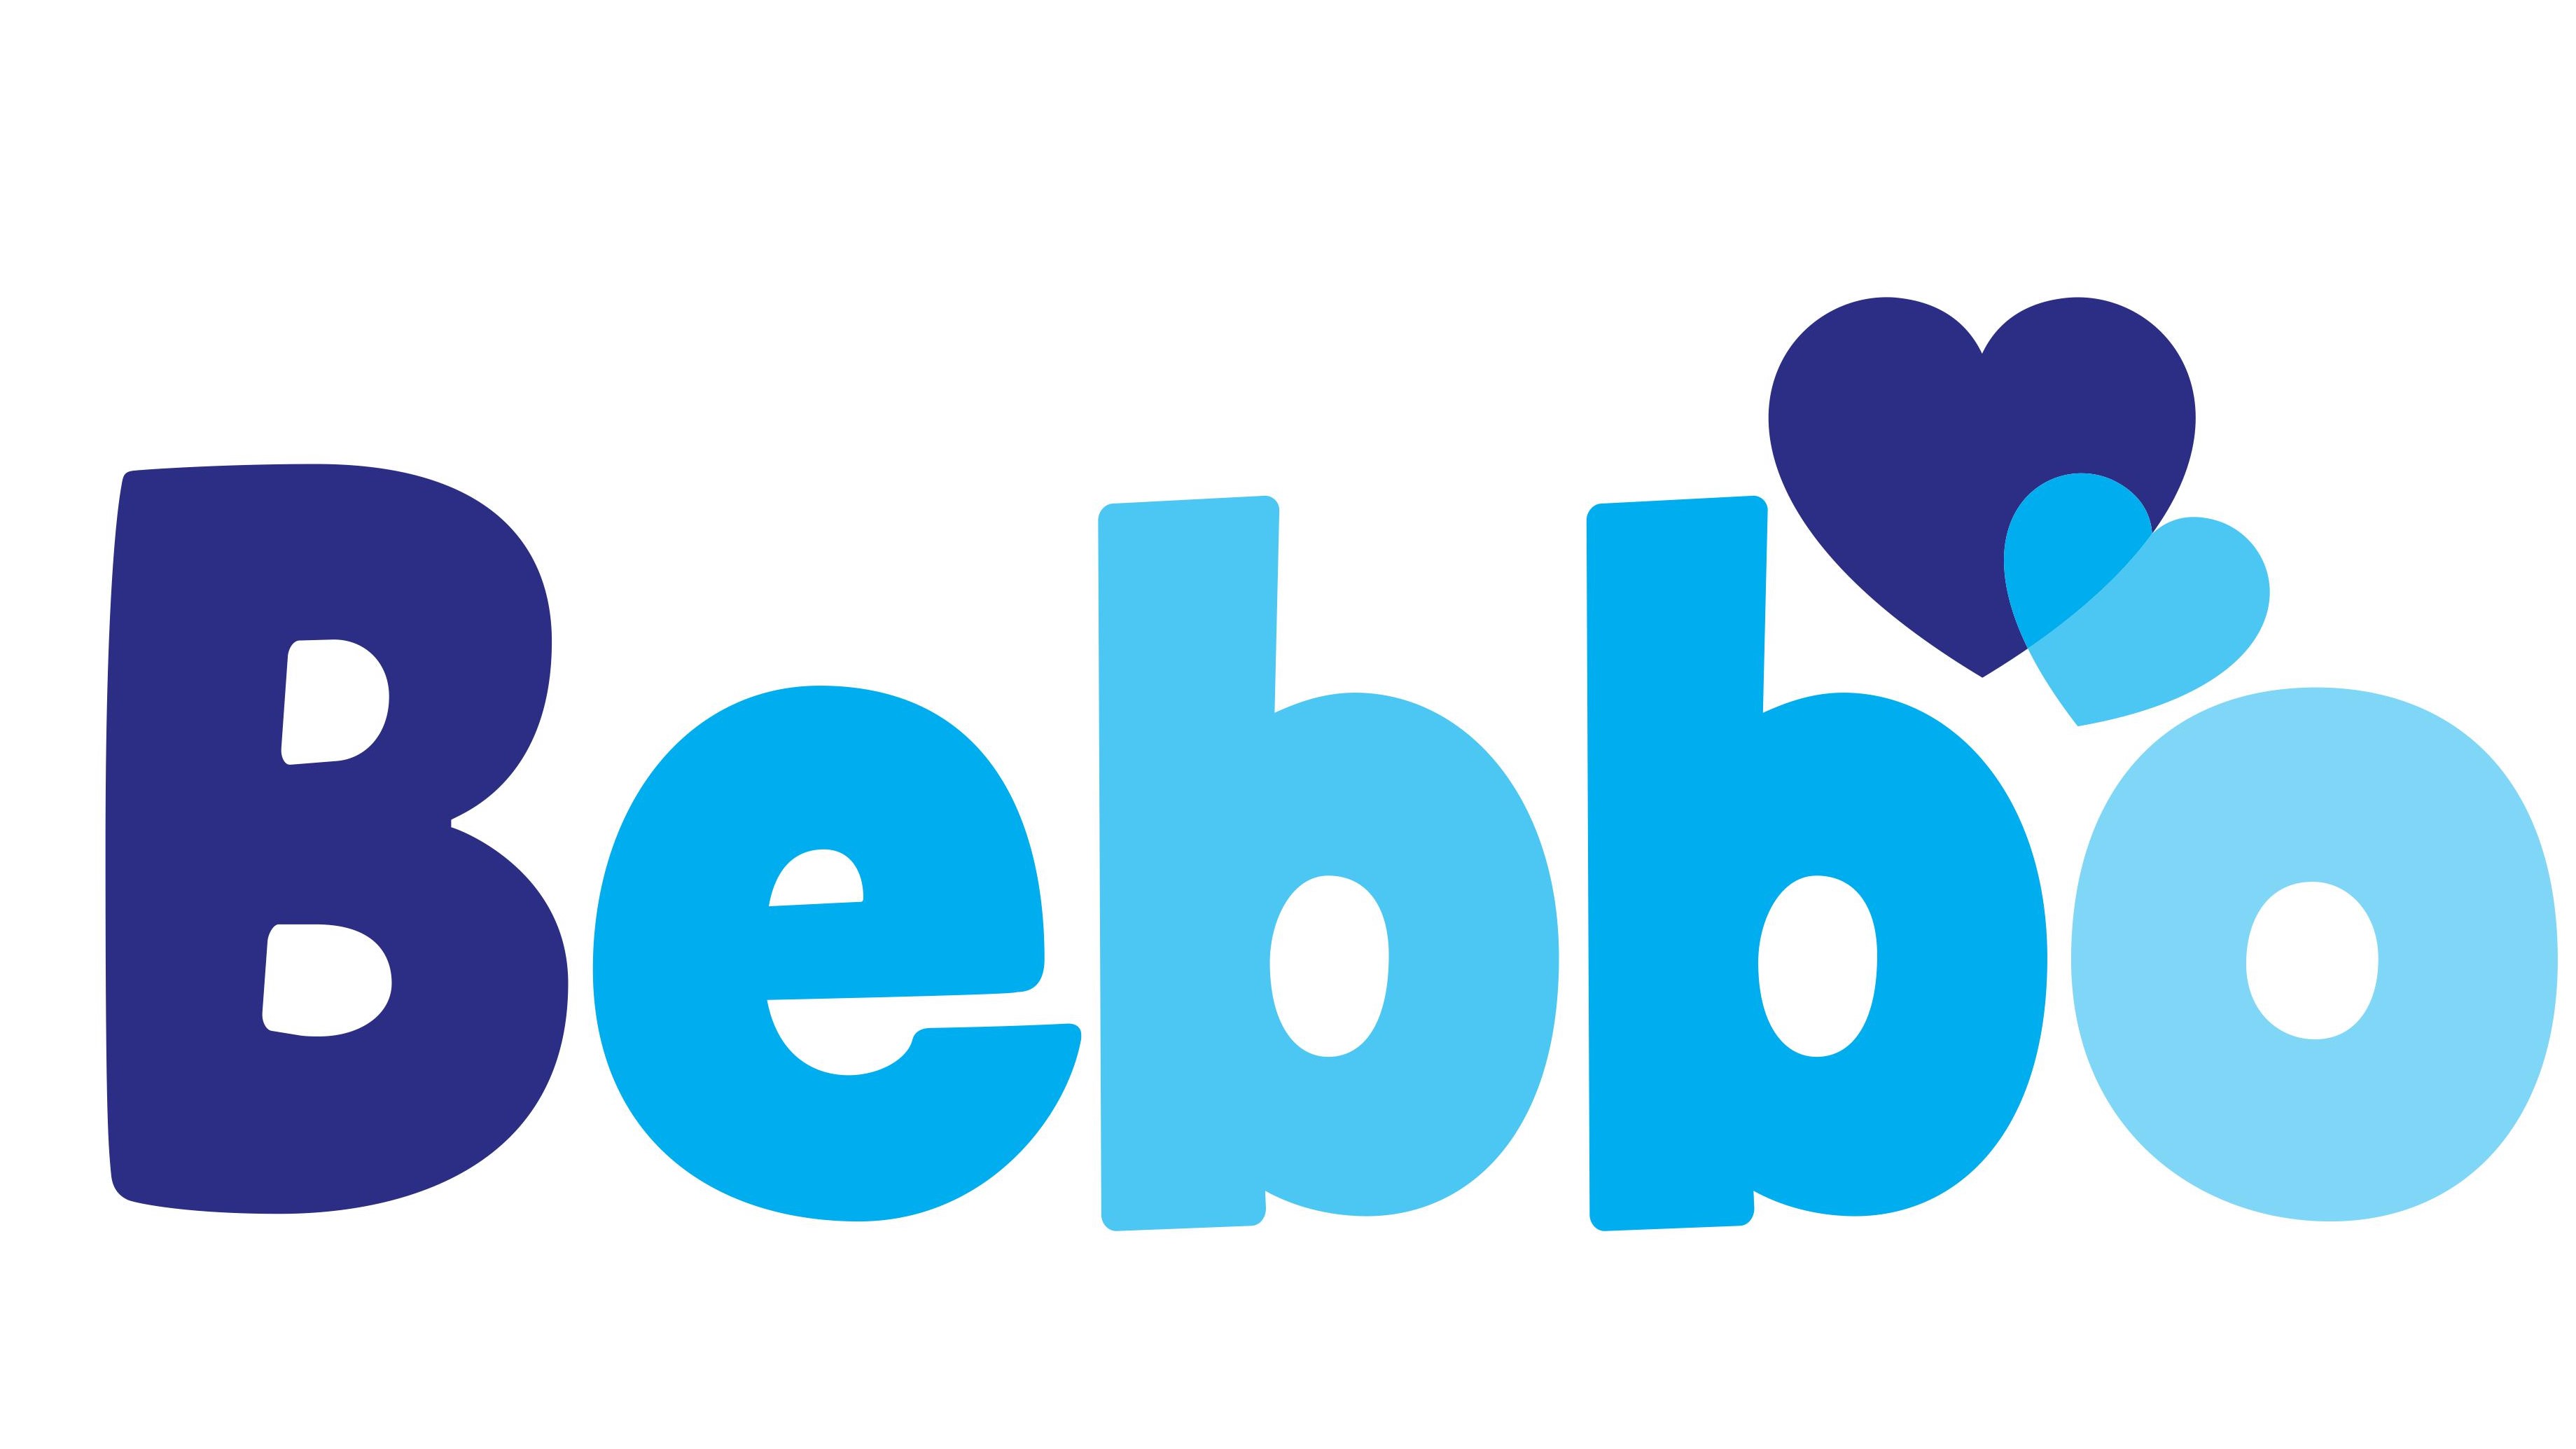 Bebbo logotype 